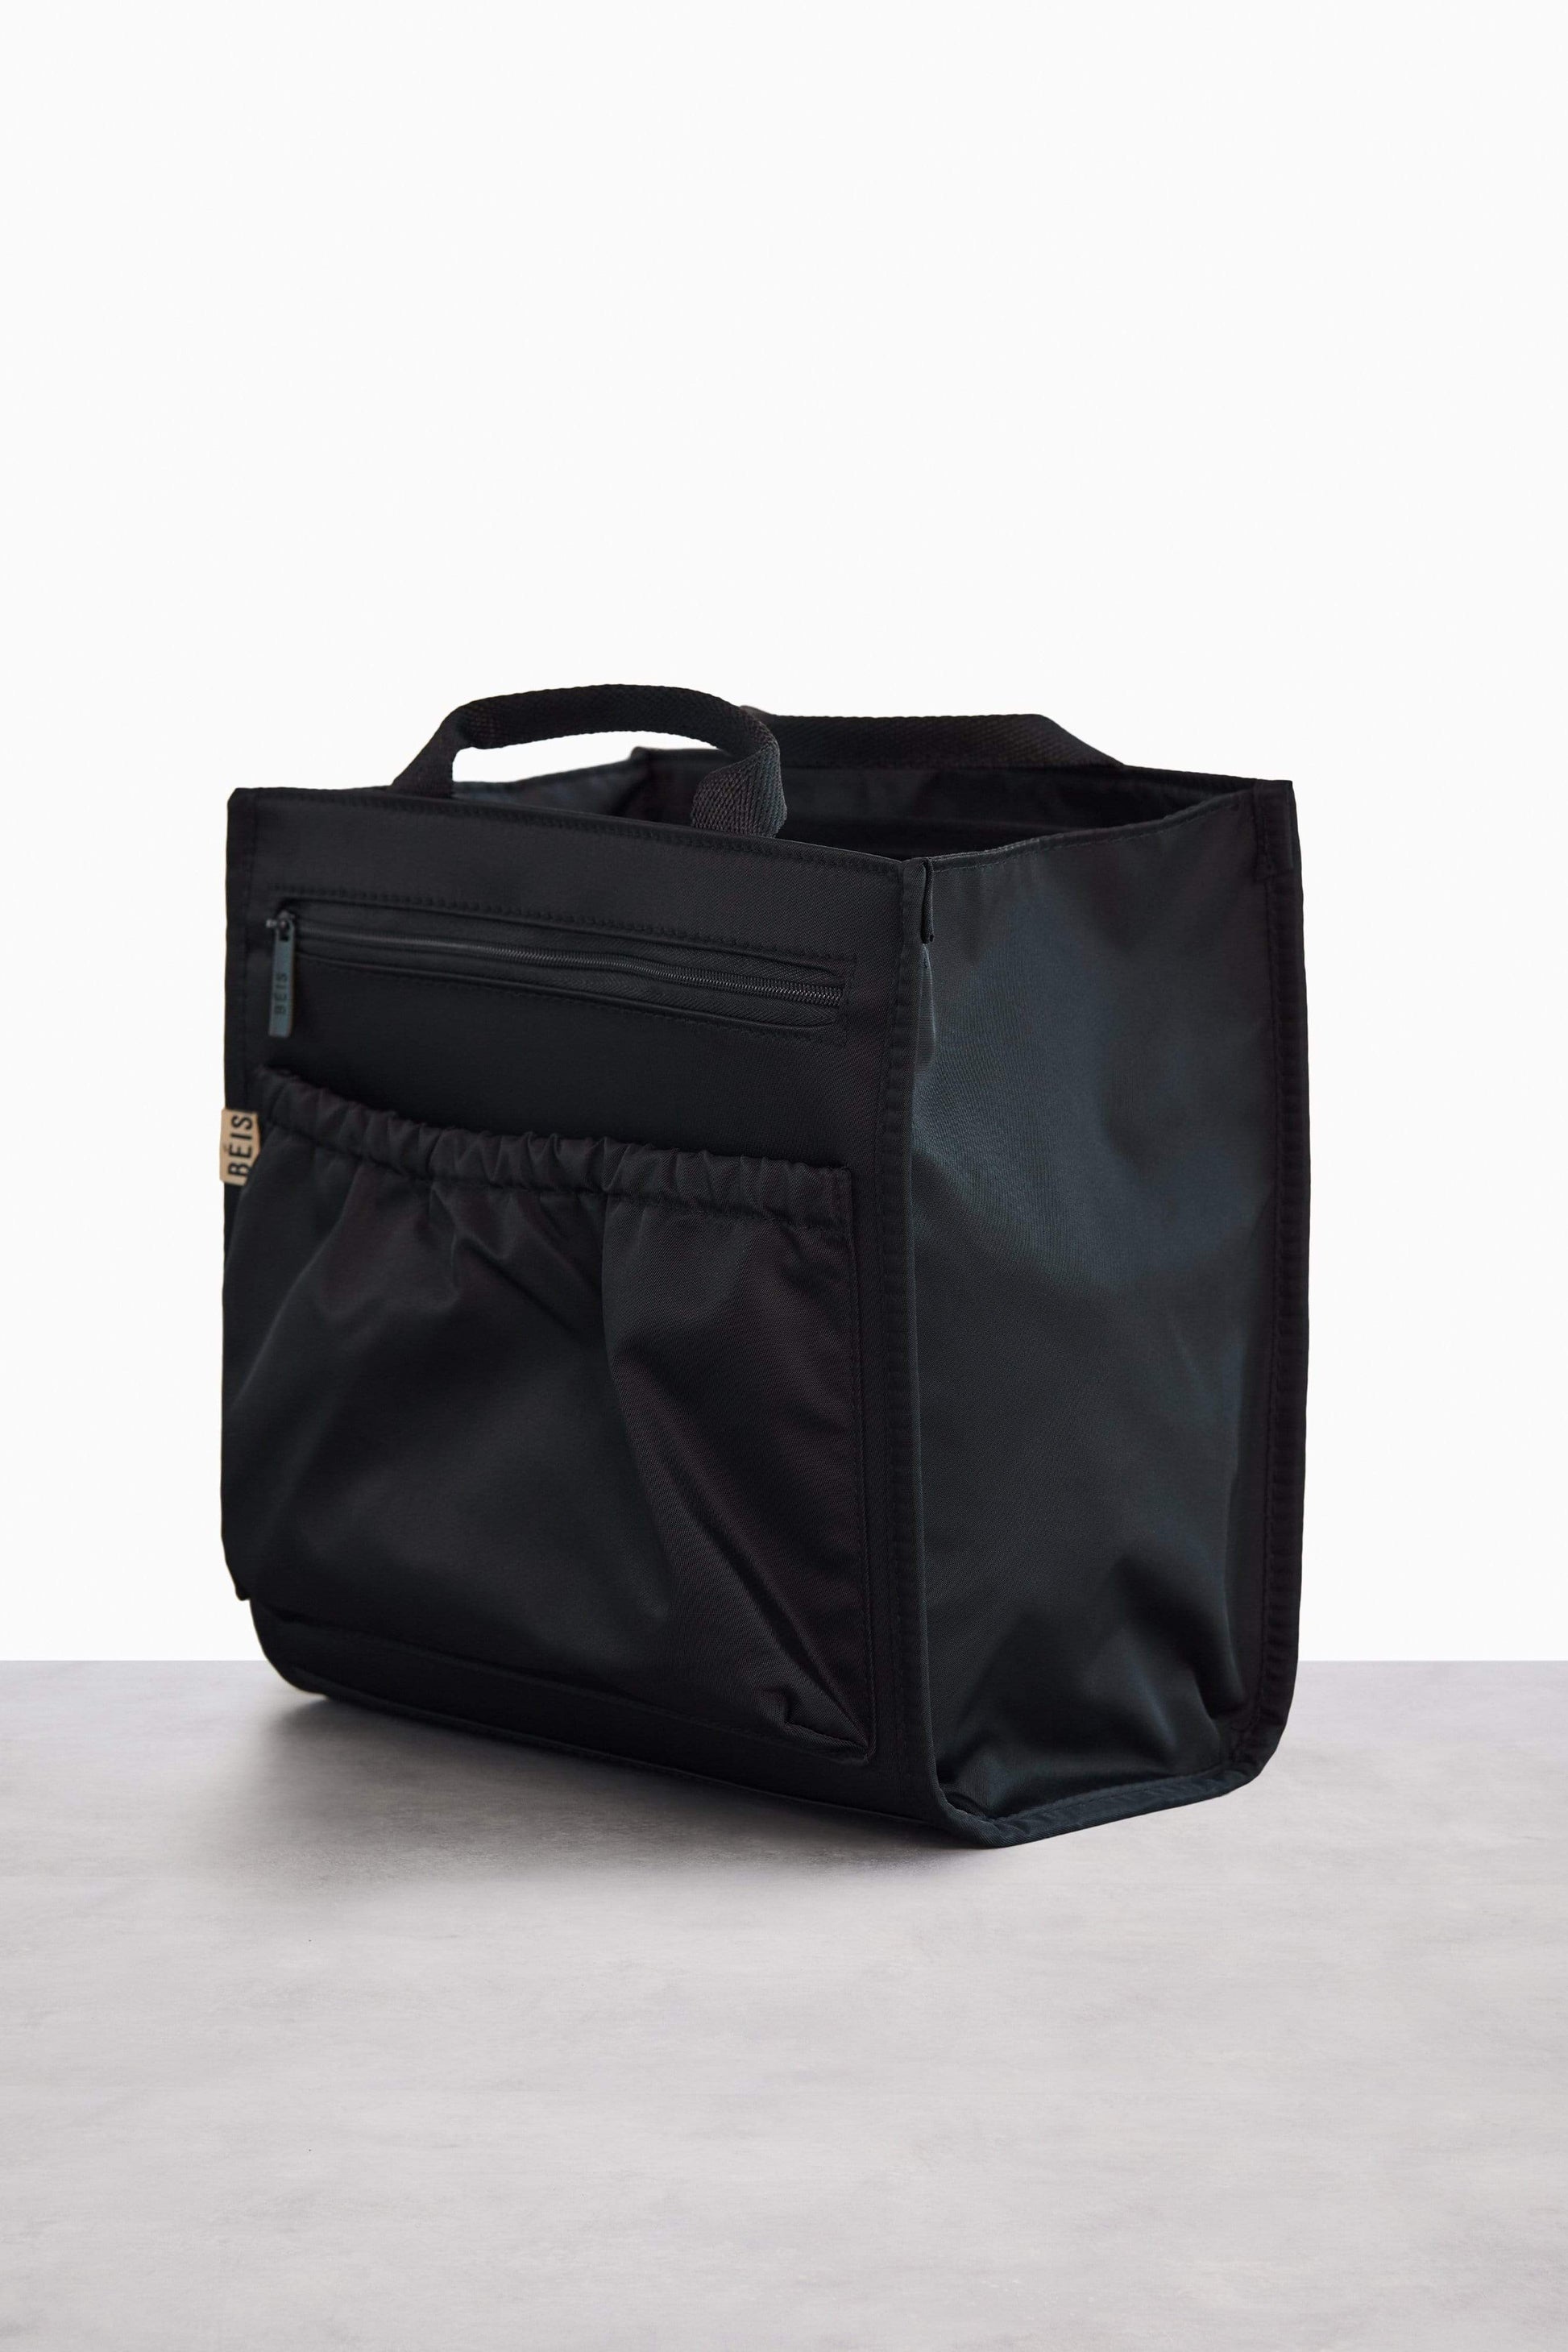  Vegan Leather Tote Bag Organizer Insert with Laptop